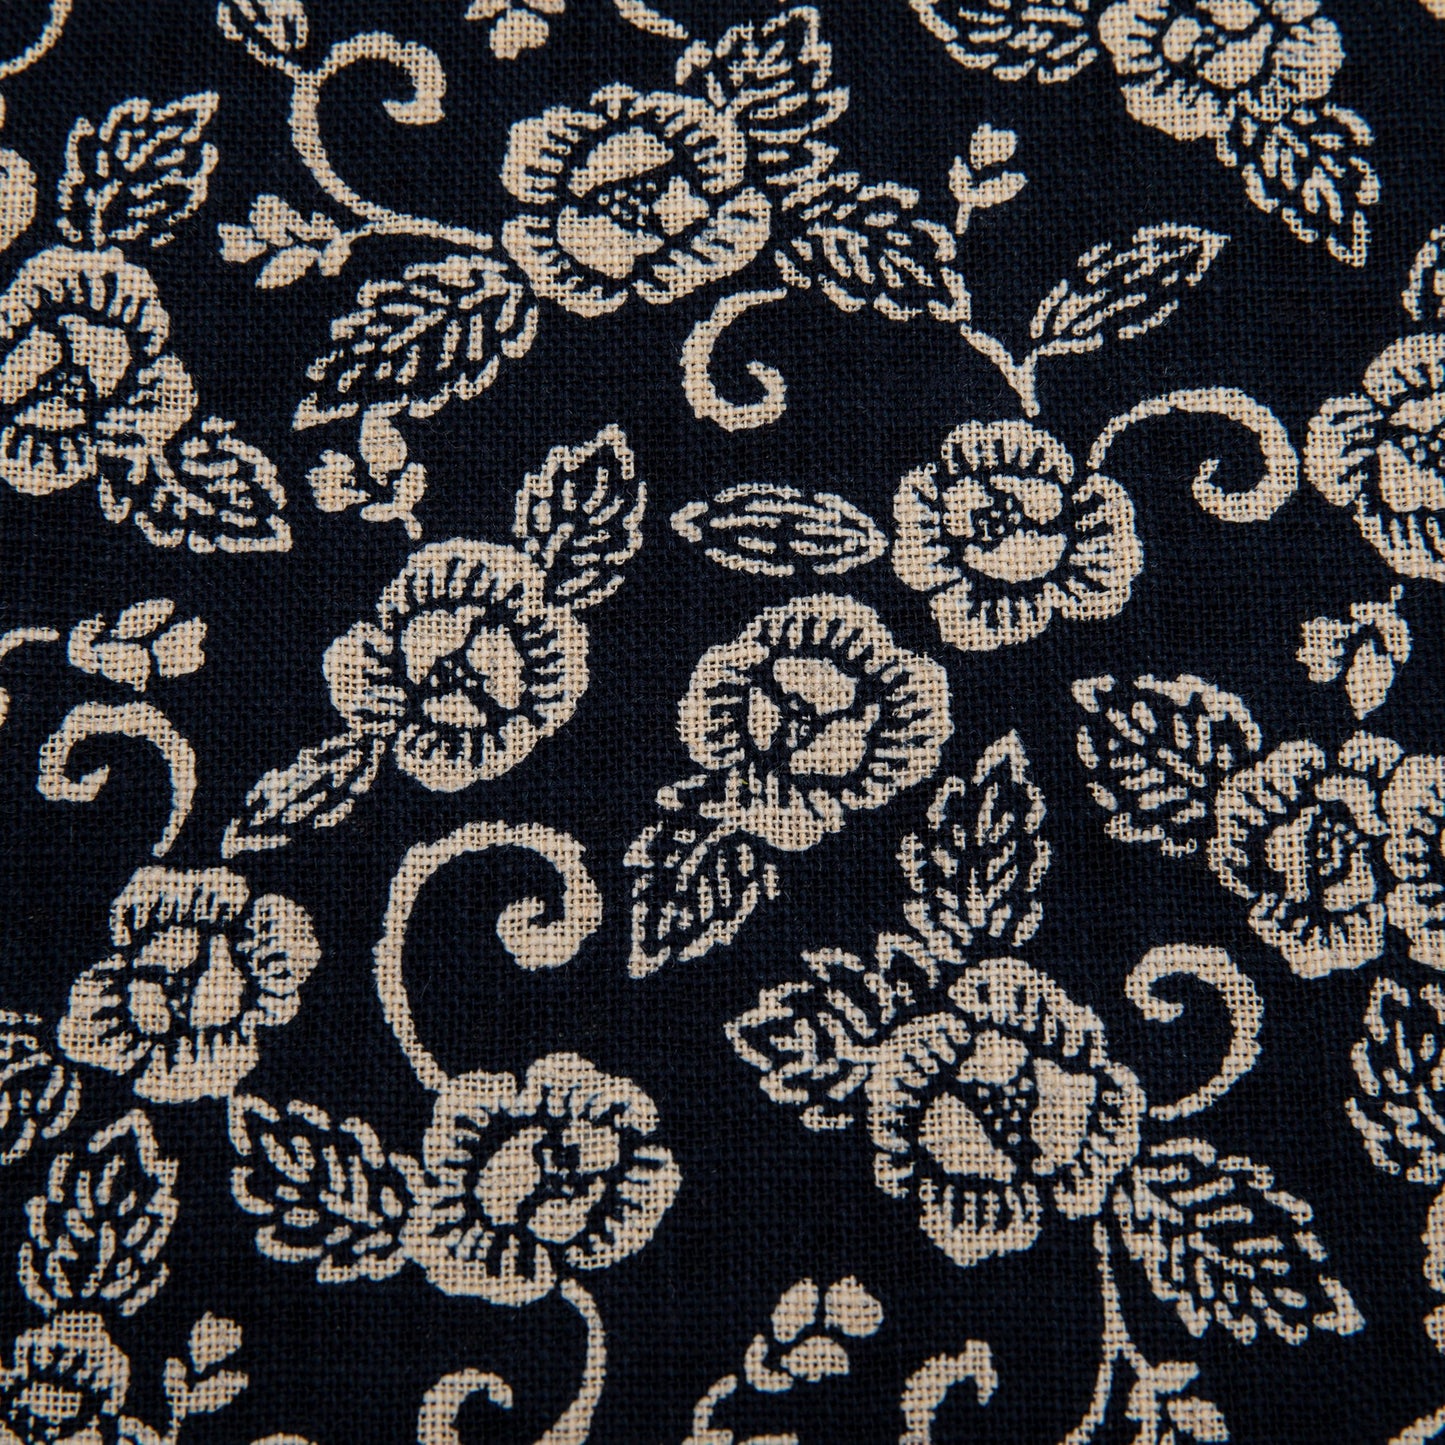 Imported Japanese Fabric - Hana Navy_Fabric_Imported from Japan_100% Cotton_Japanese Sleep System